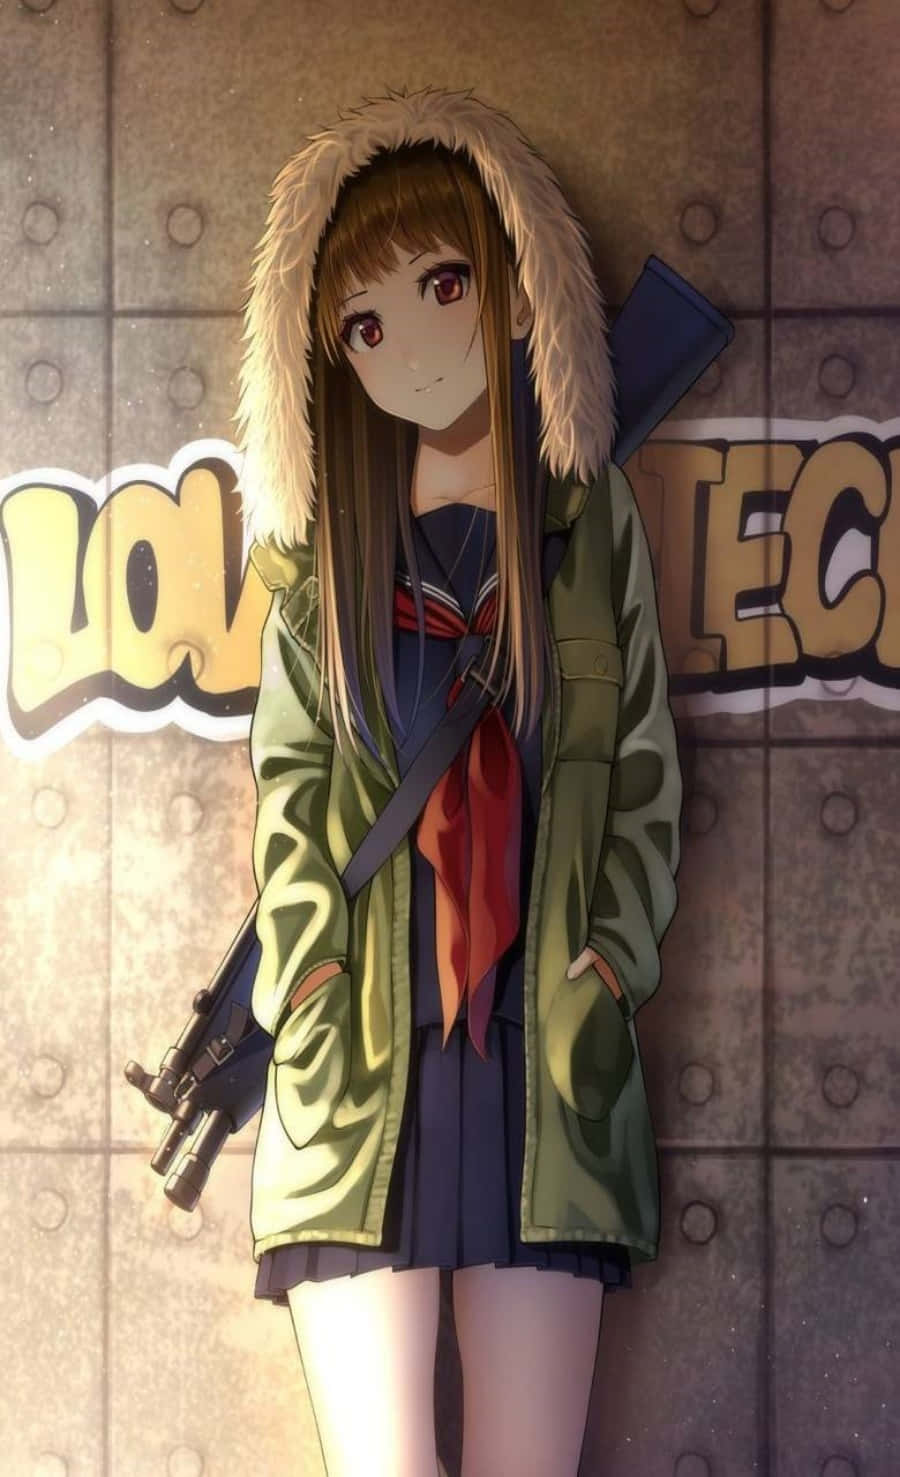 Anime Girl in a Stylish Hoodie